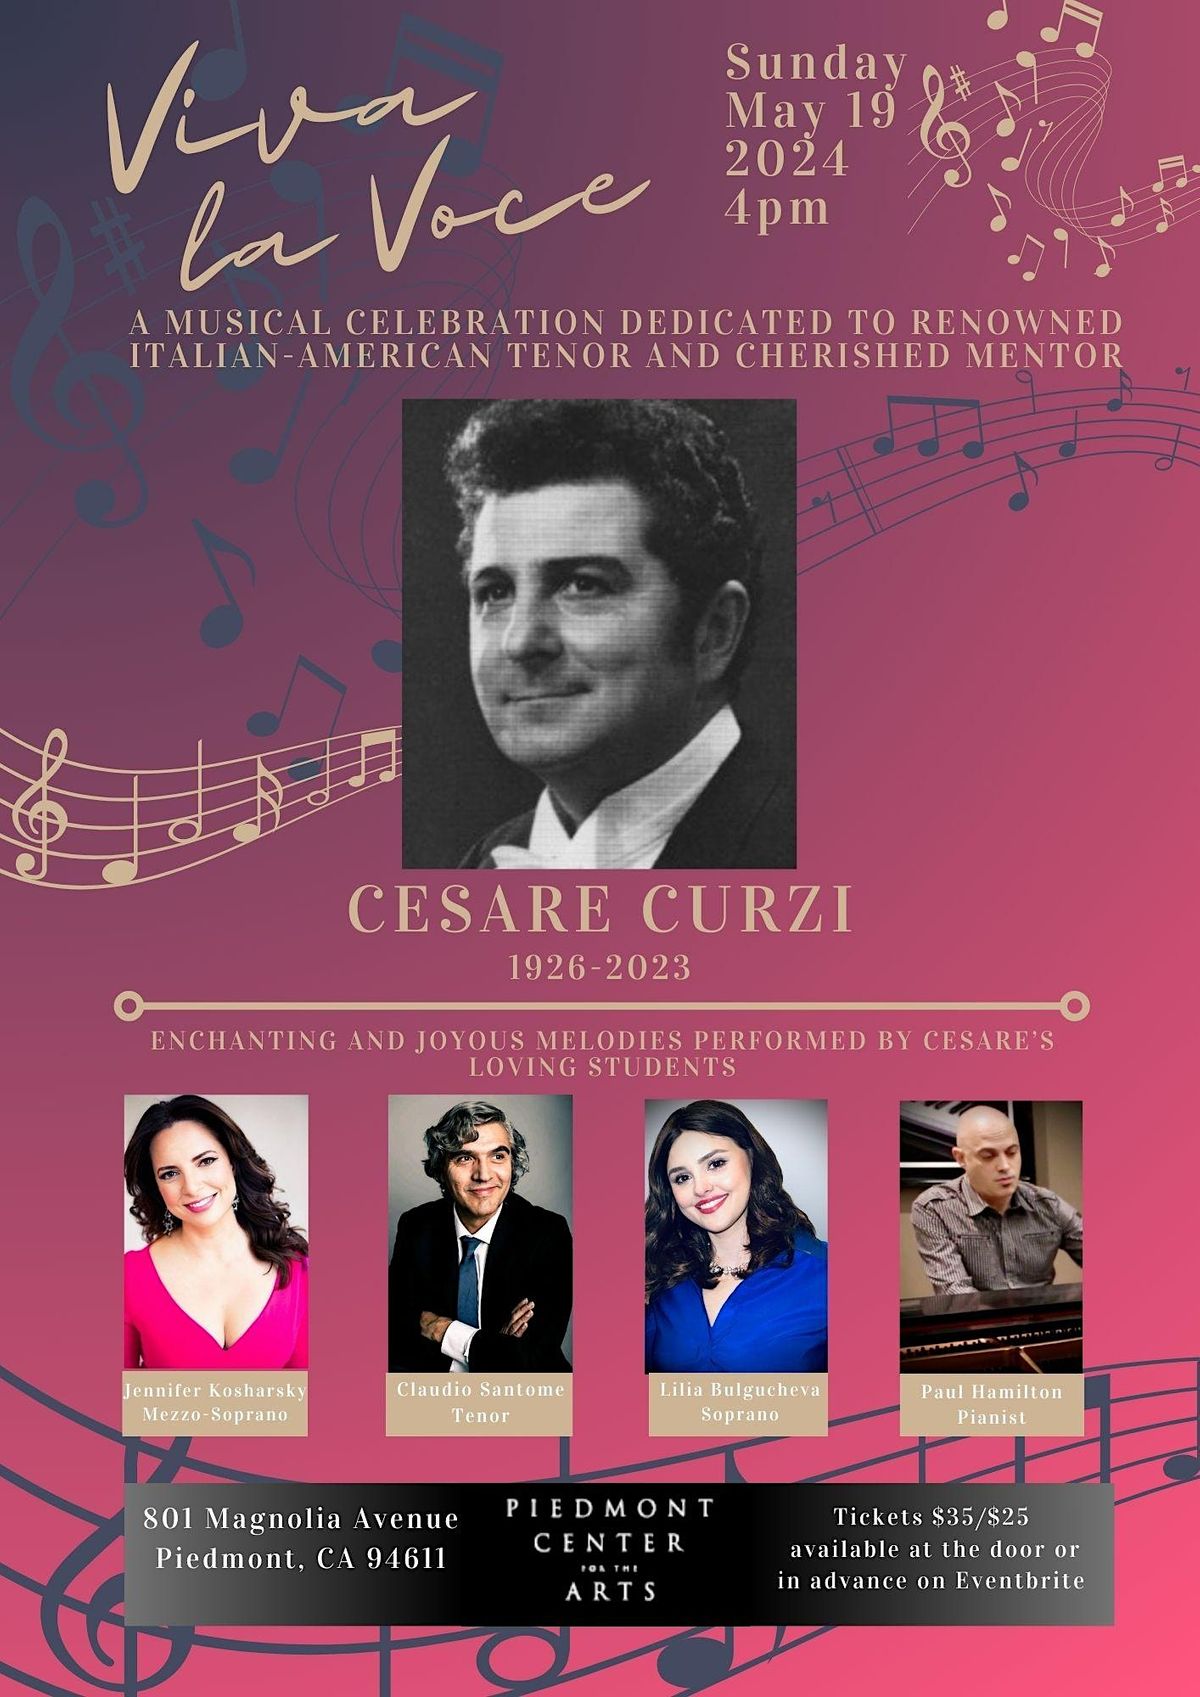 Viva la Voce - Musical tribute to a great tenor and mentor, Cesare Curzi